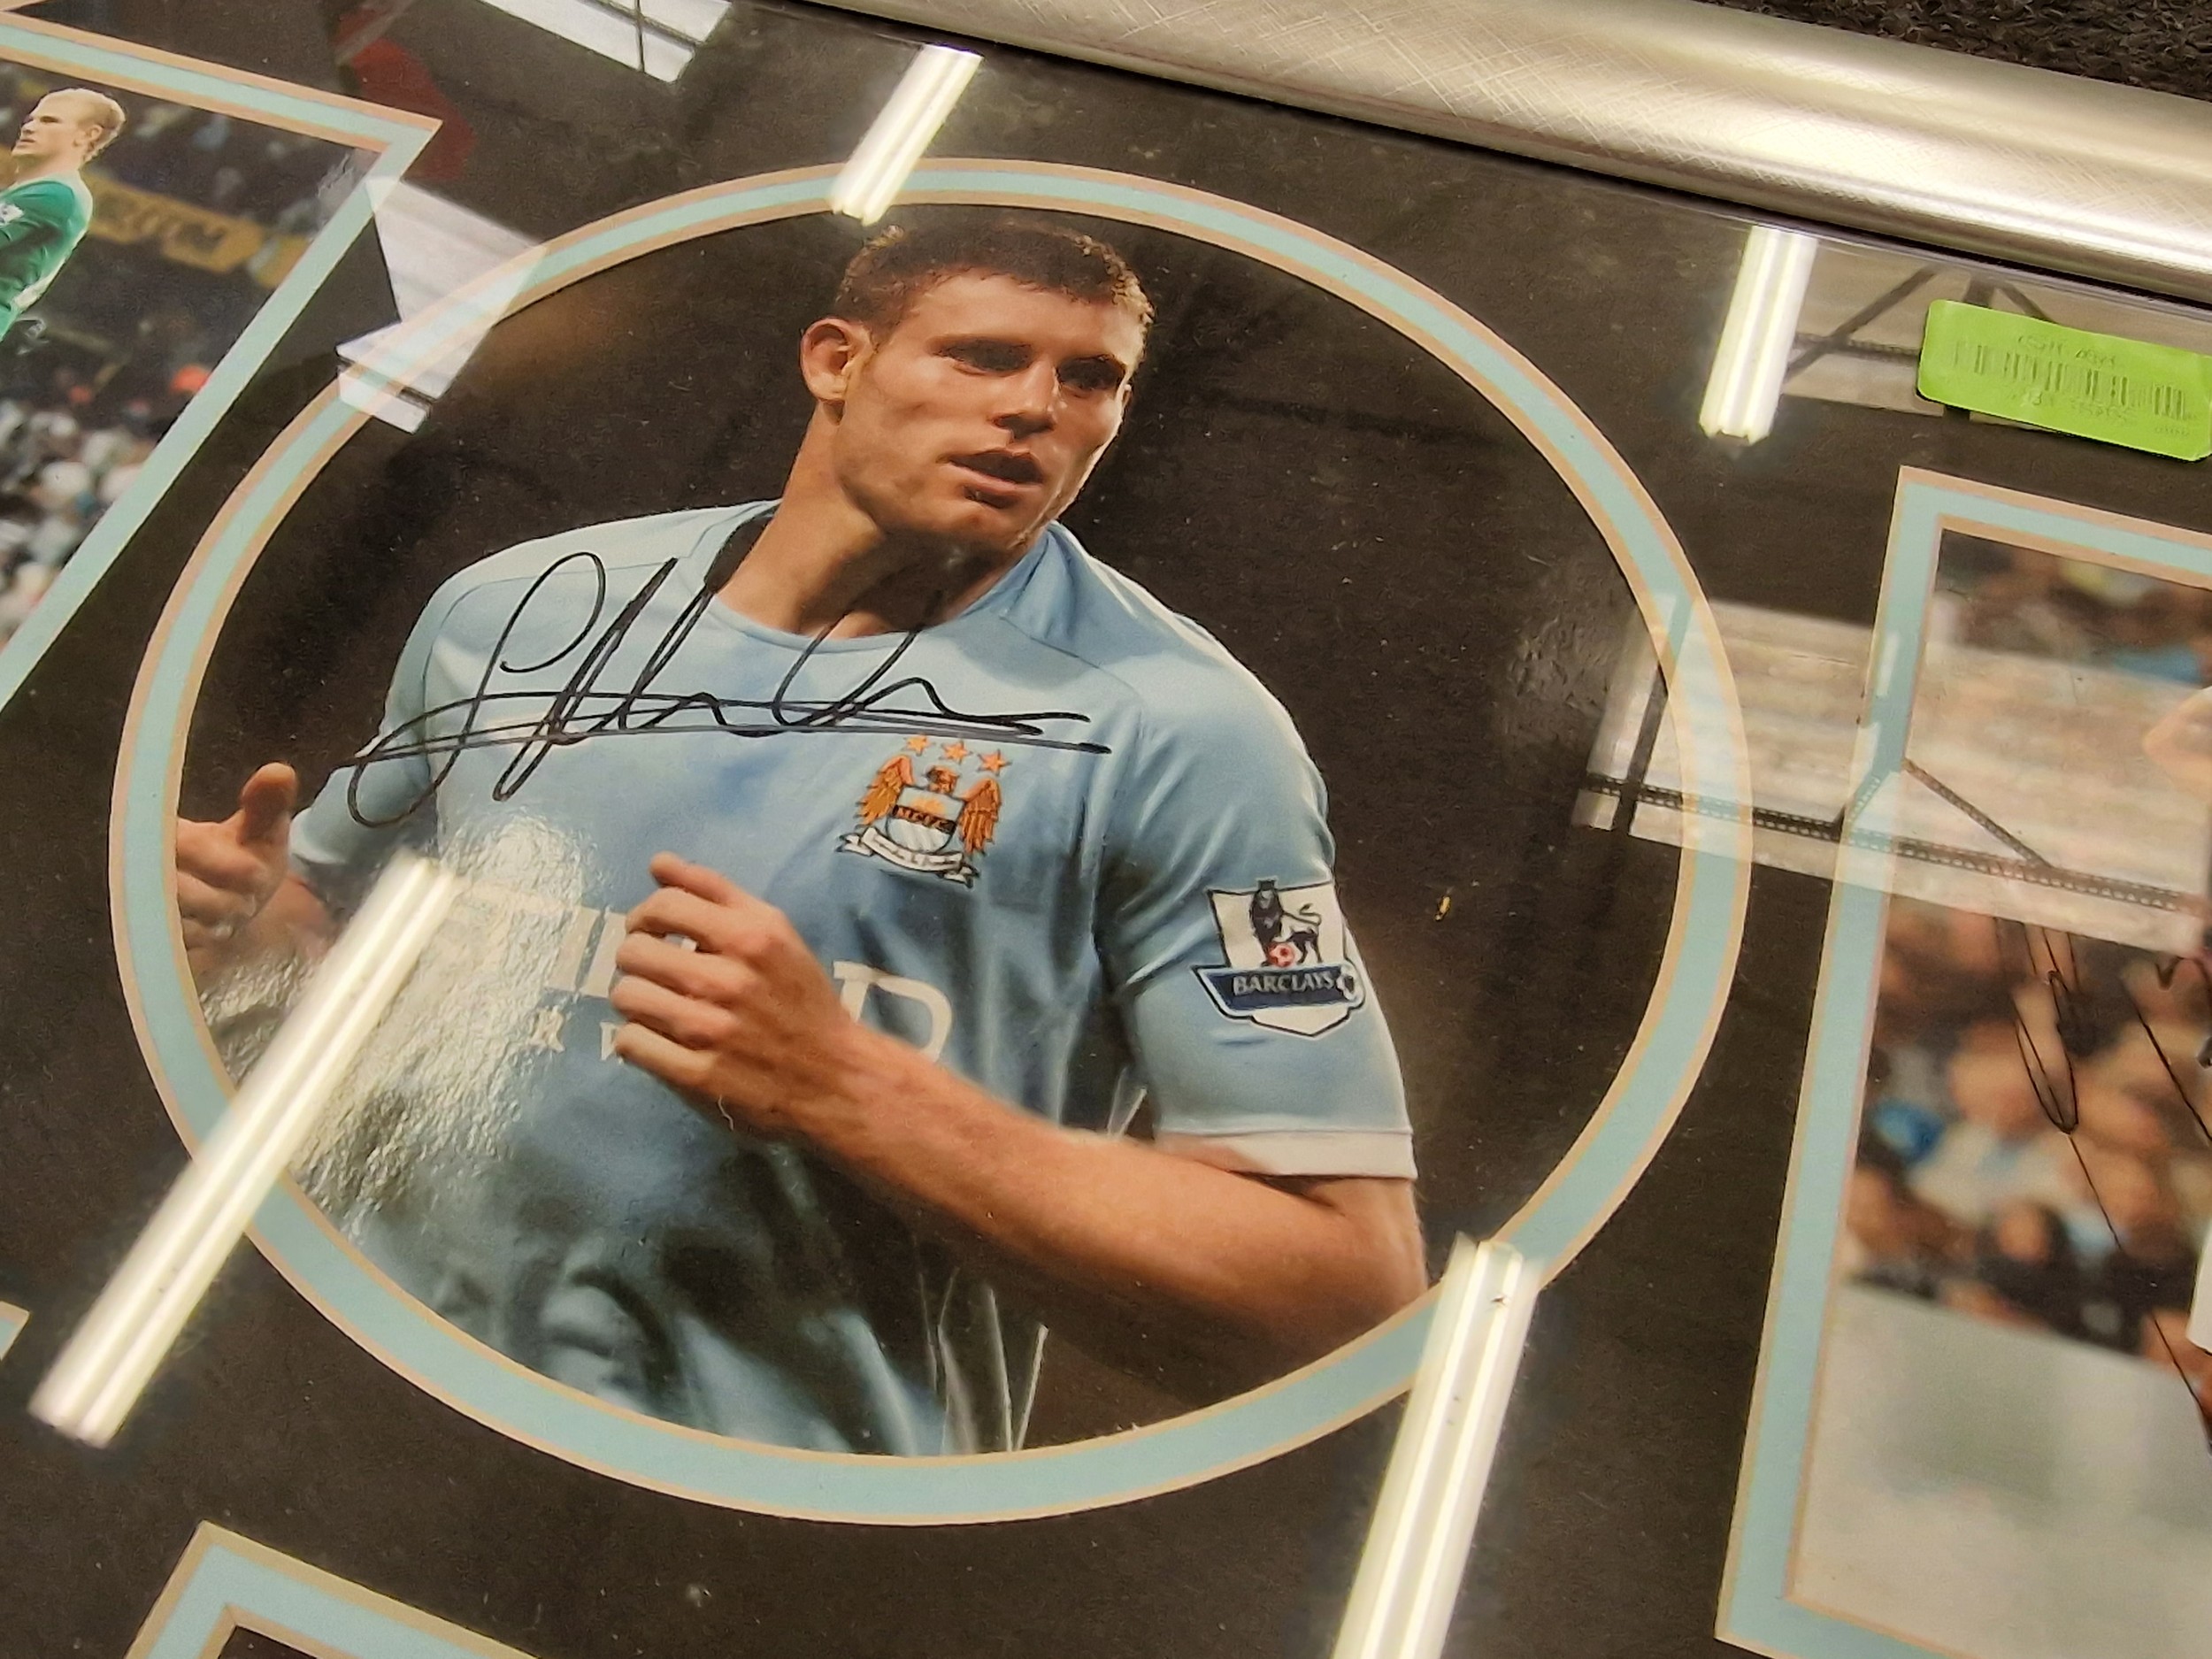 Manchester City football memorabilia autograph collection past and present Premiere league - Image 4 of 4